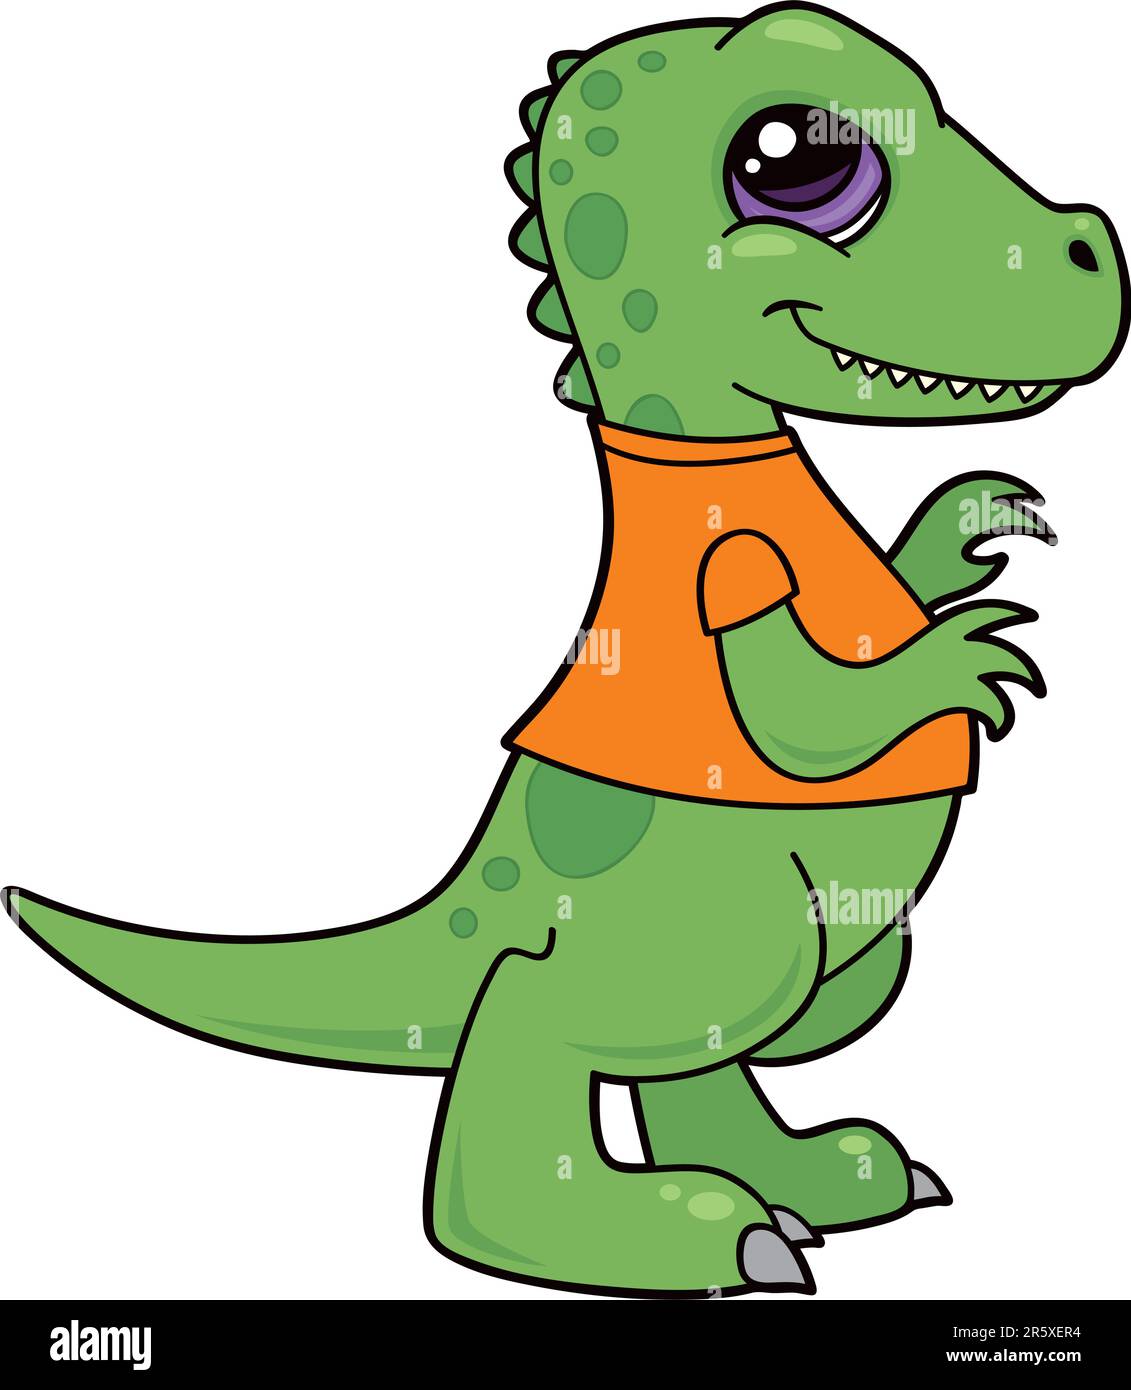 Vector cartoon illustration of a green baby Tyrannosaurus Rex dinosaur wearing an orange shirt. Stock Vector